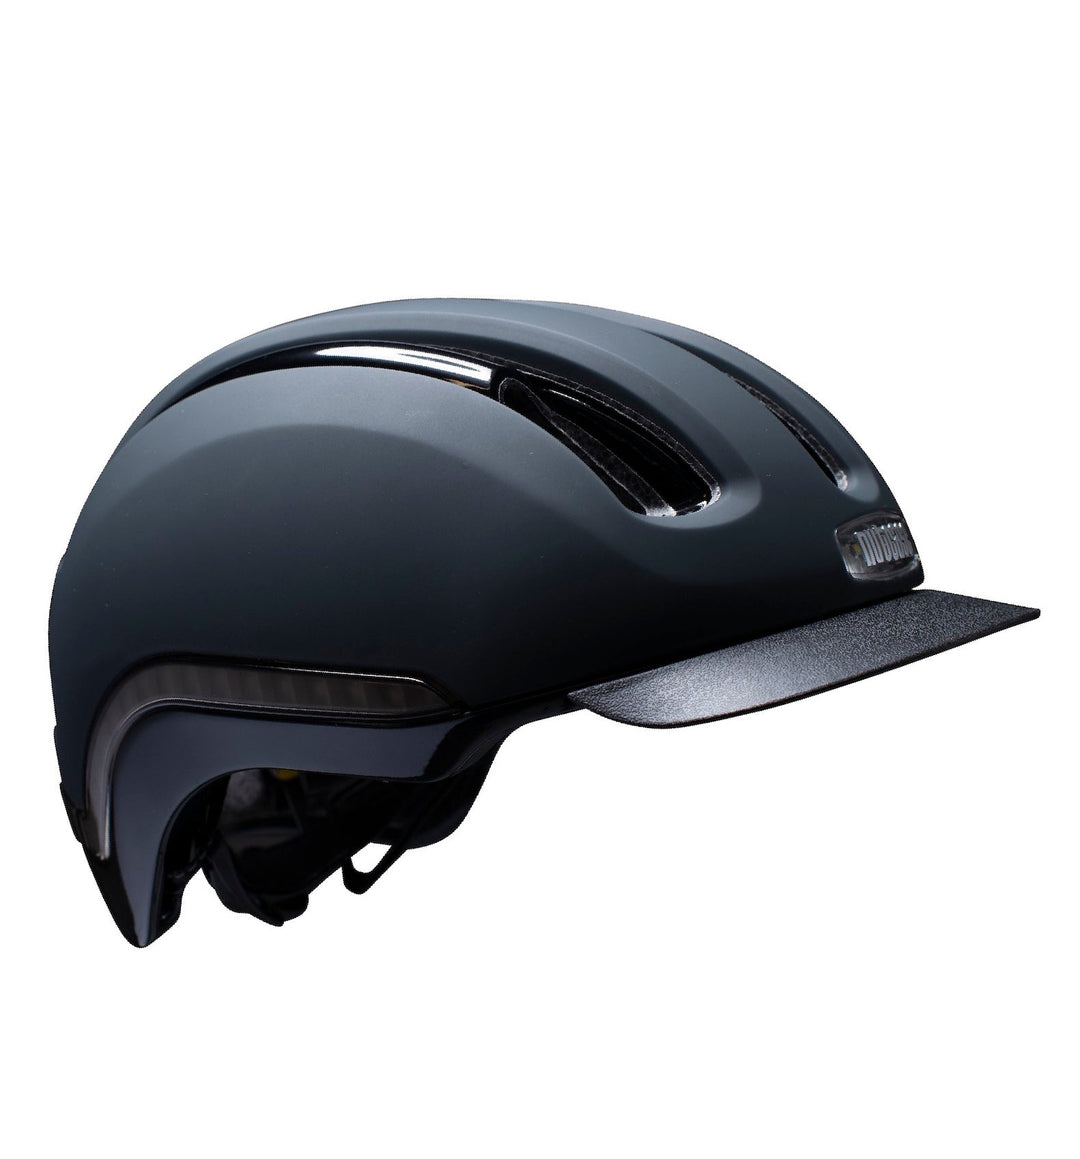 Nutcase Vio MIPS Helmet Kit Matte S/M (55-59cm)